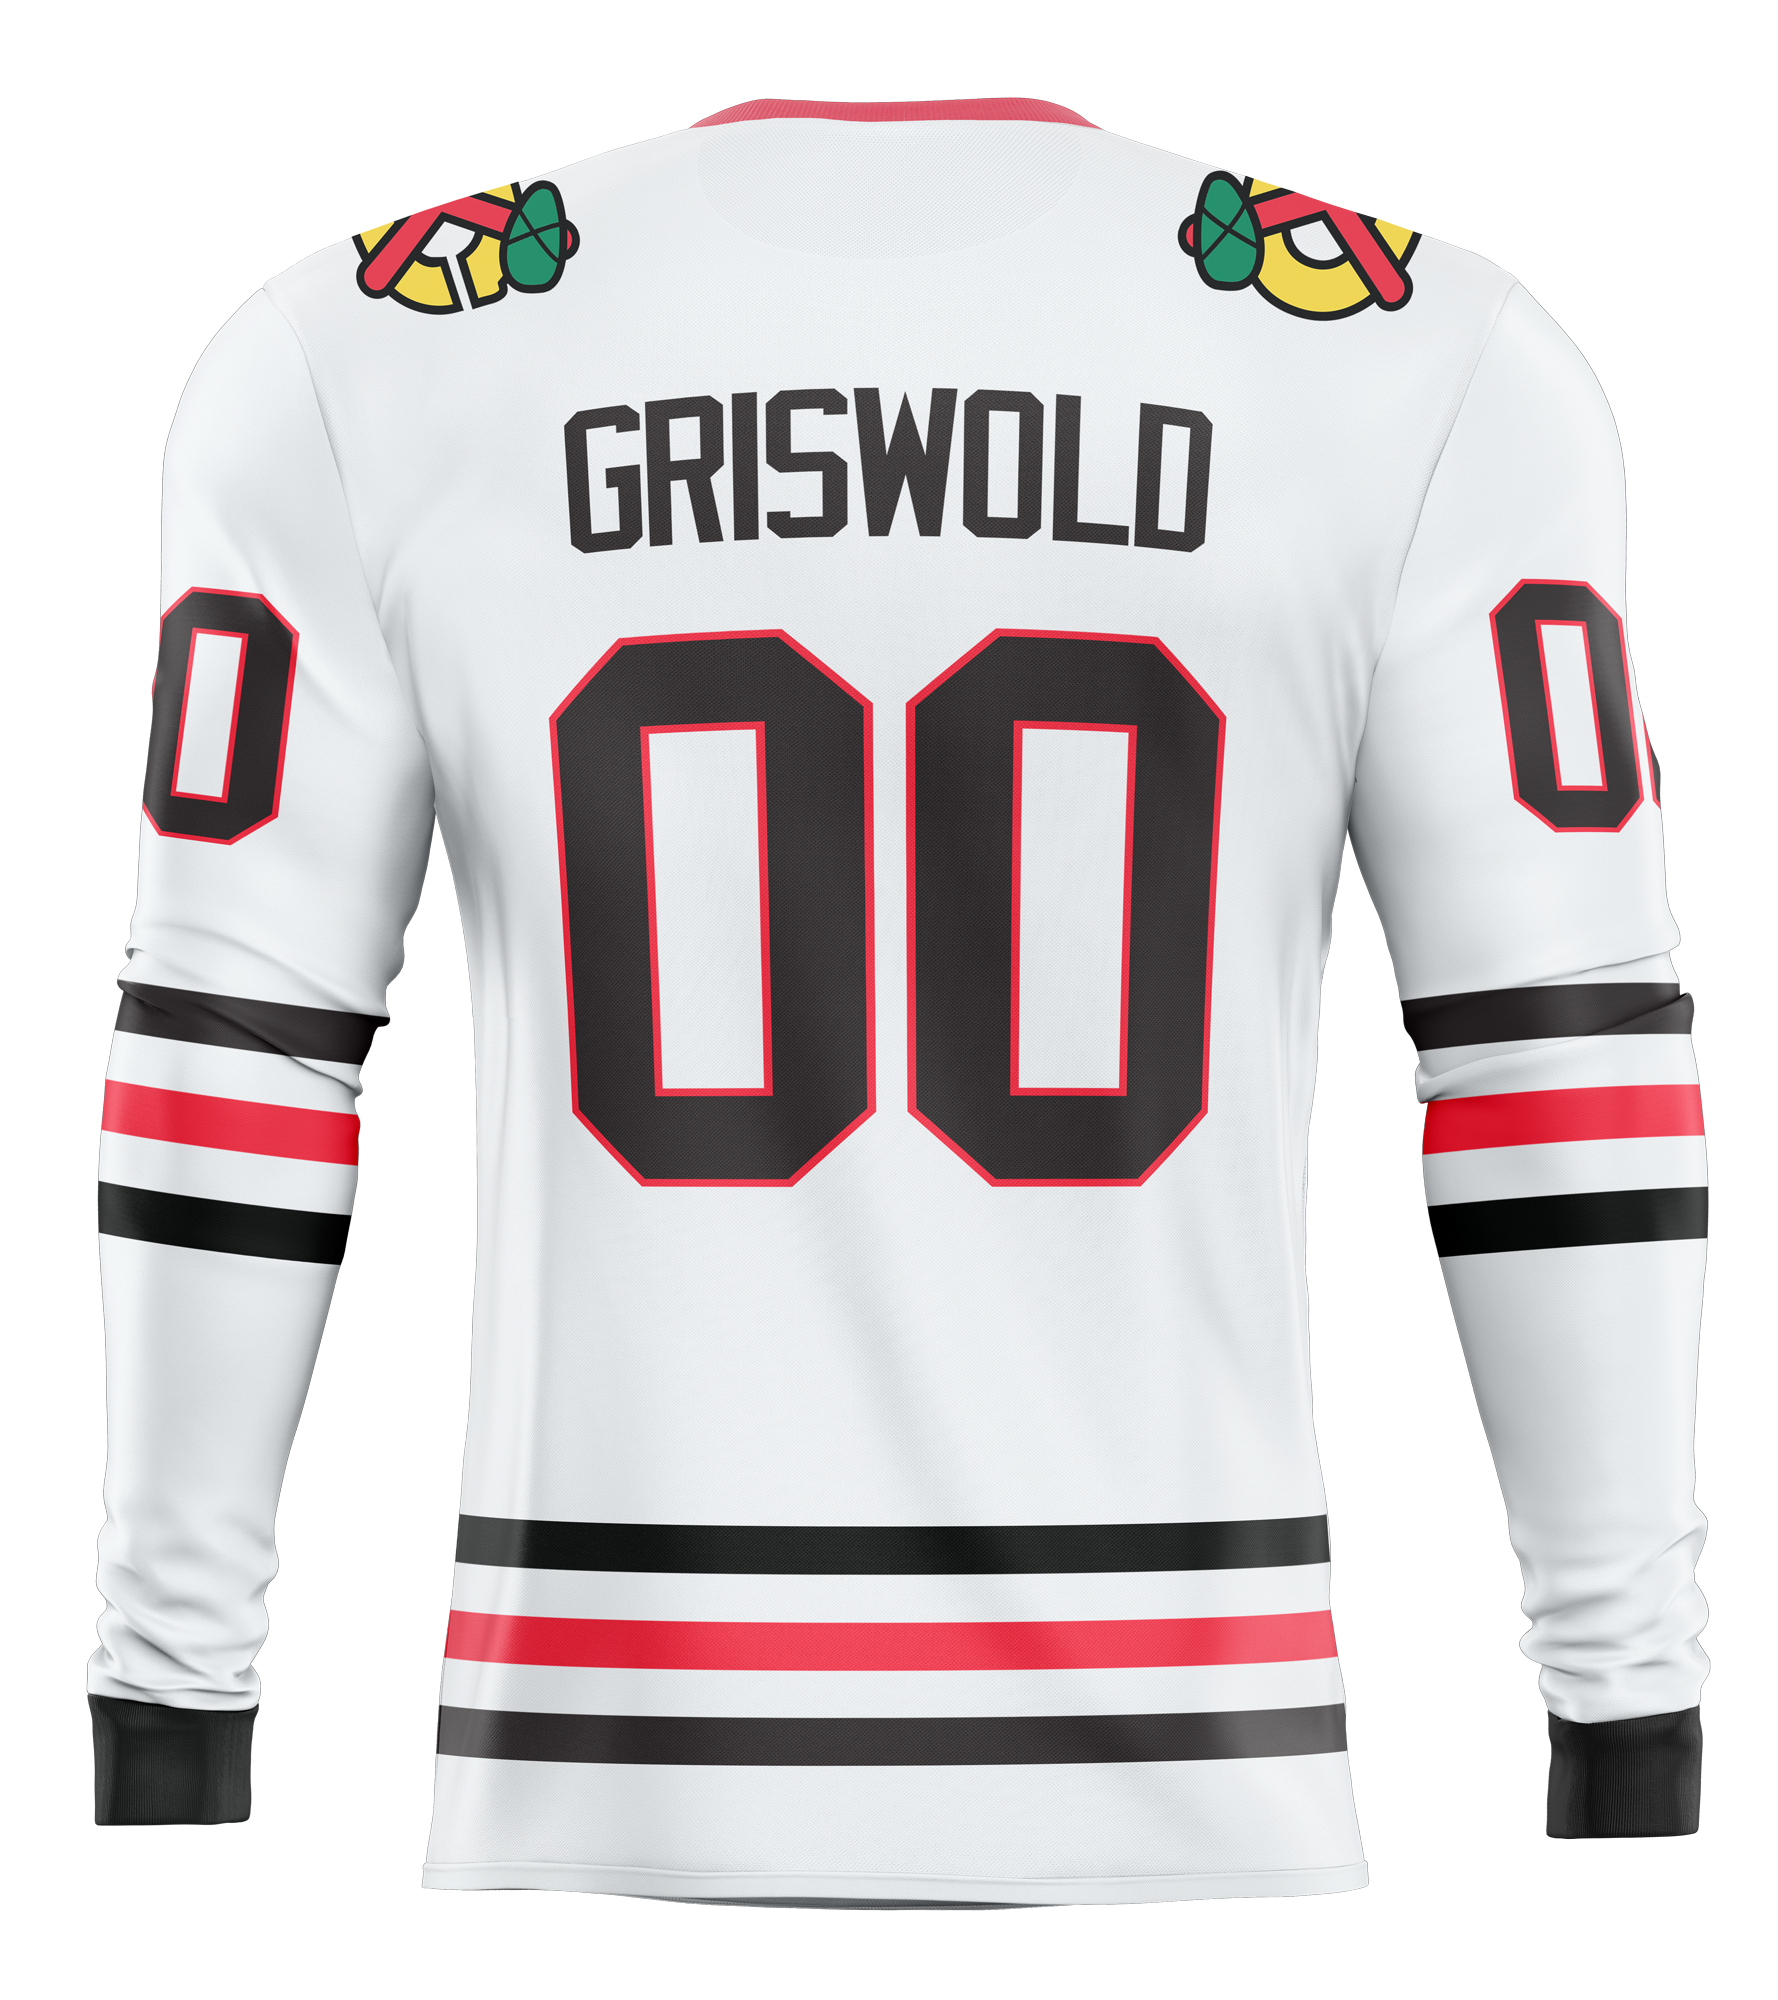 Clark W. Griswold Jersey, box lacrosse uniforms